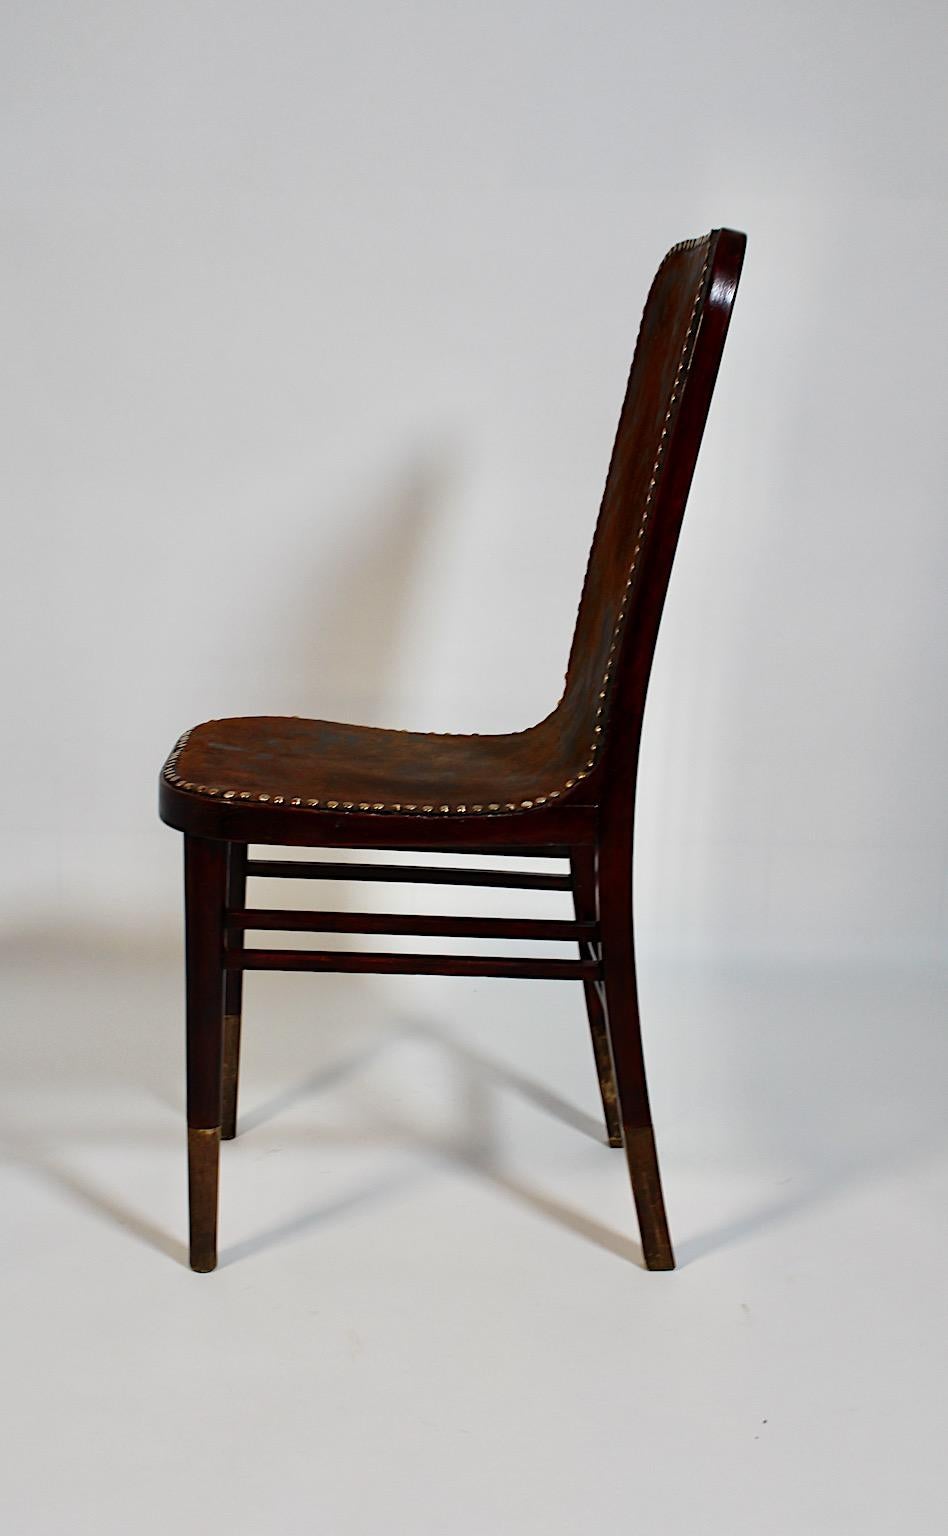 Jugendstil Side Chair Beech Leather by Joseph Urban Gebrüder Thonet 1903 Vienna For Sale 2